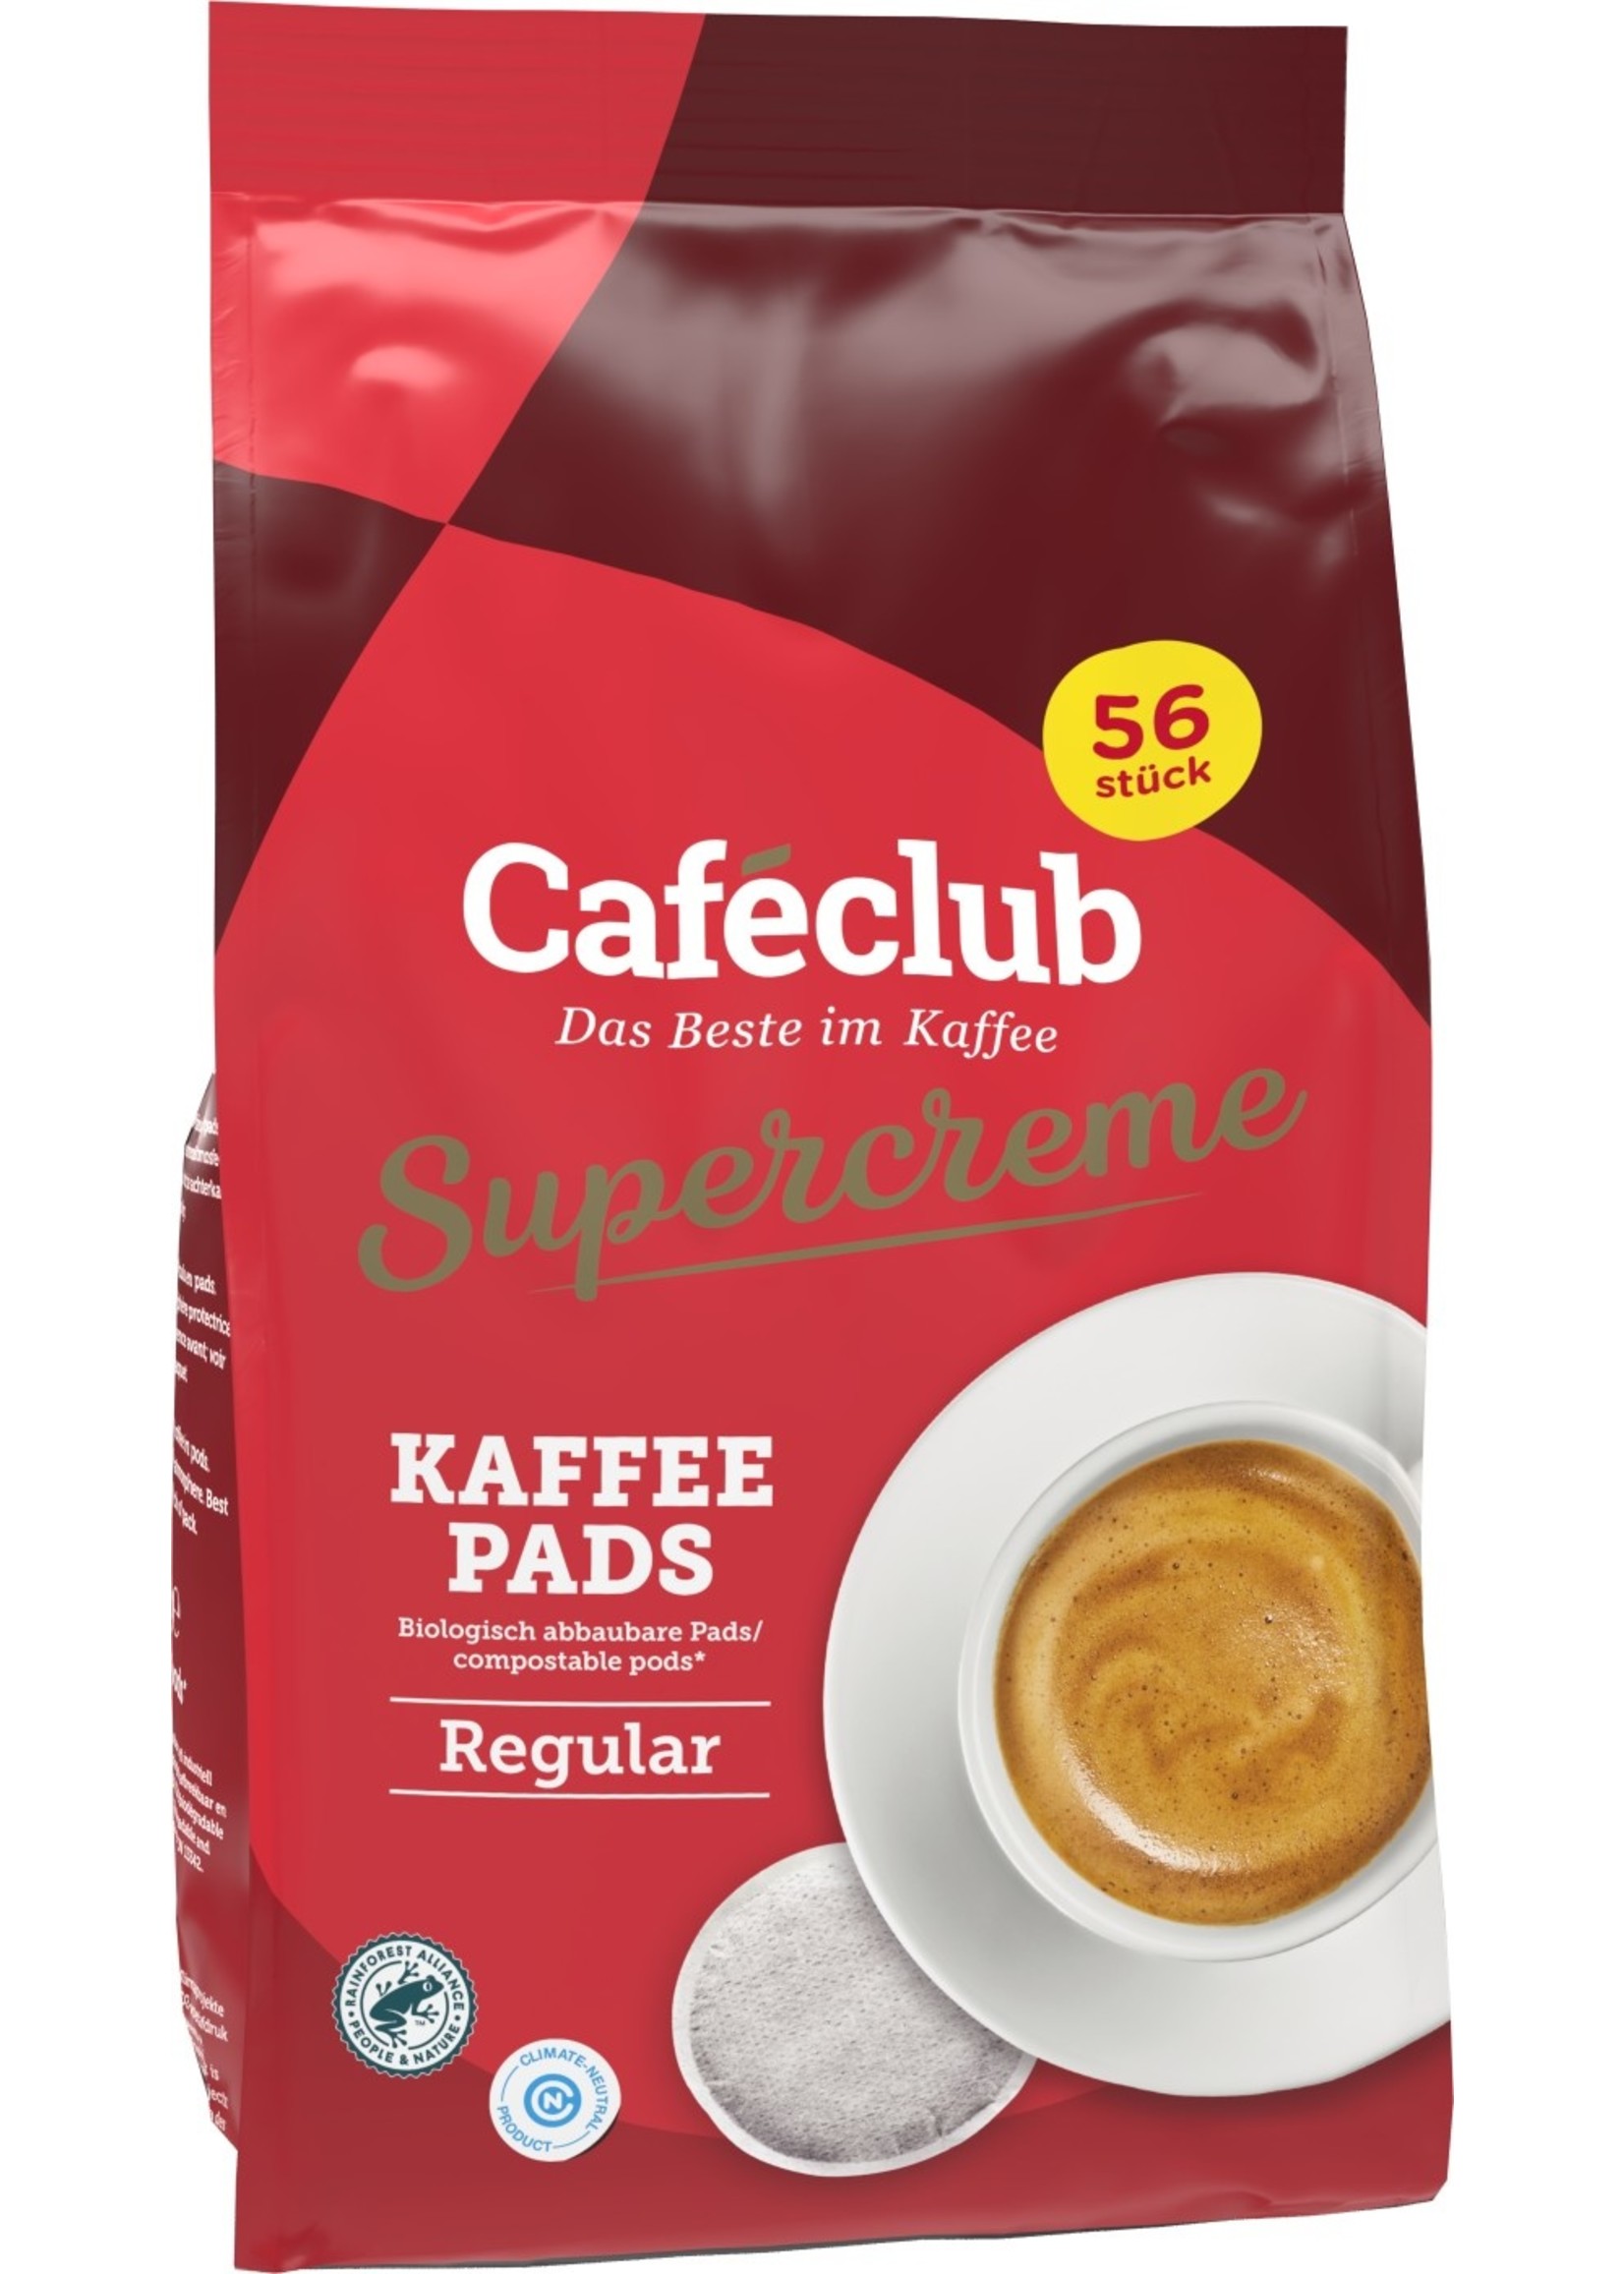 Caféclub Caféclub Supercreme Regular Pads, 56x